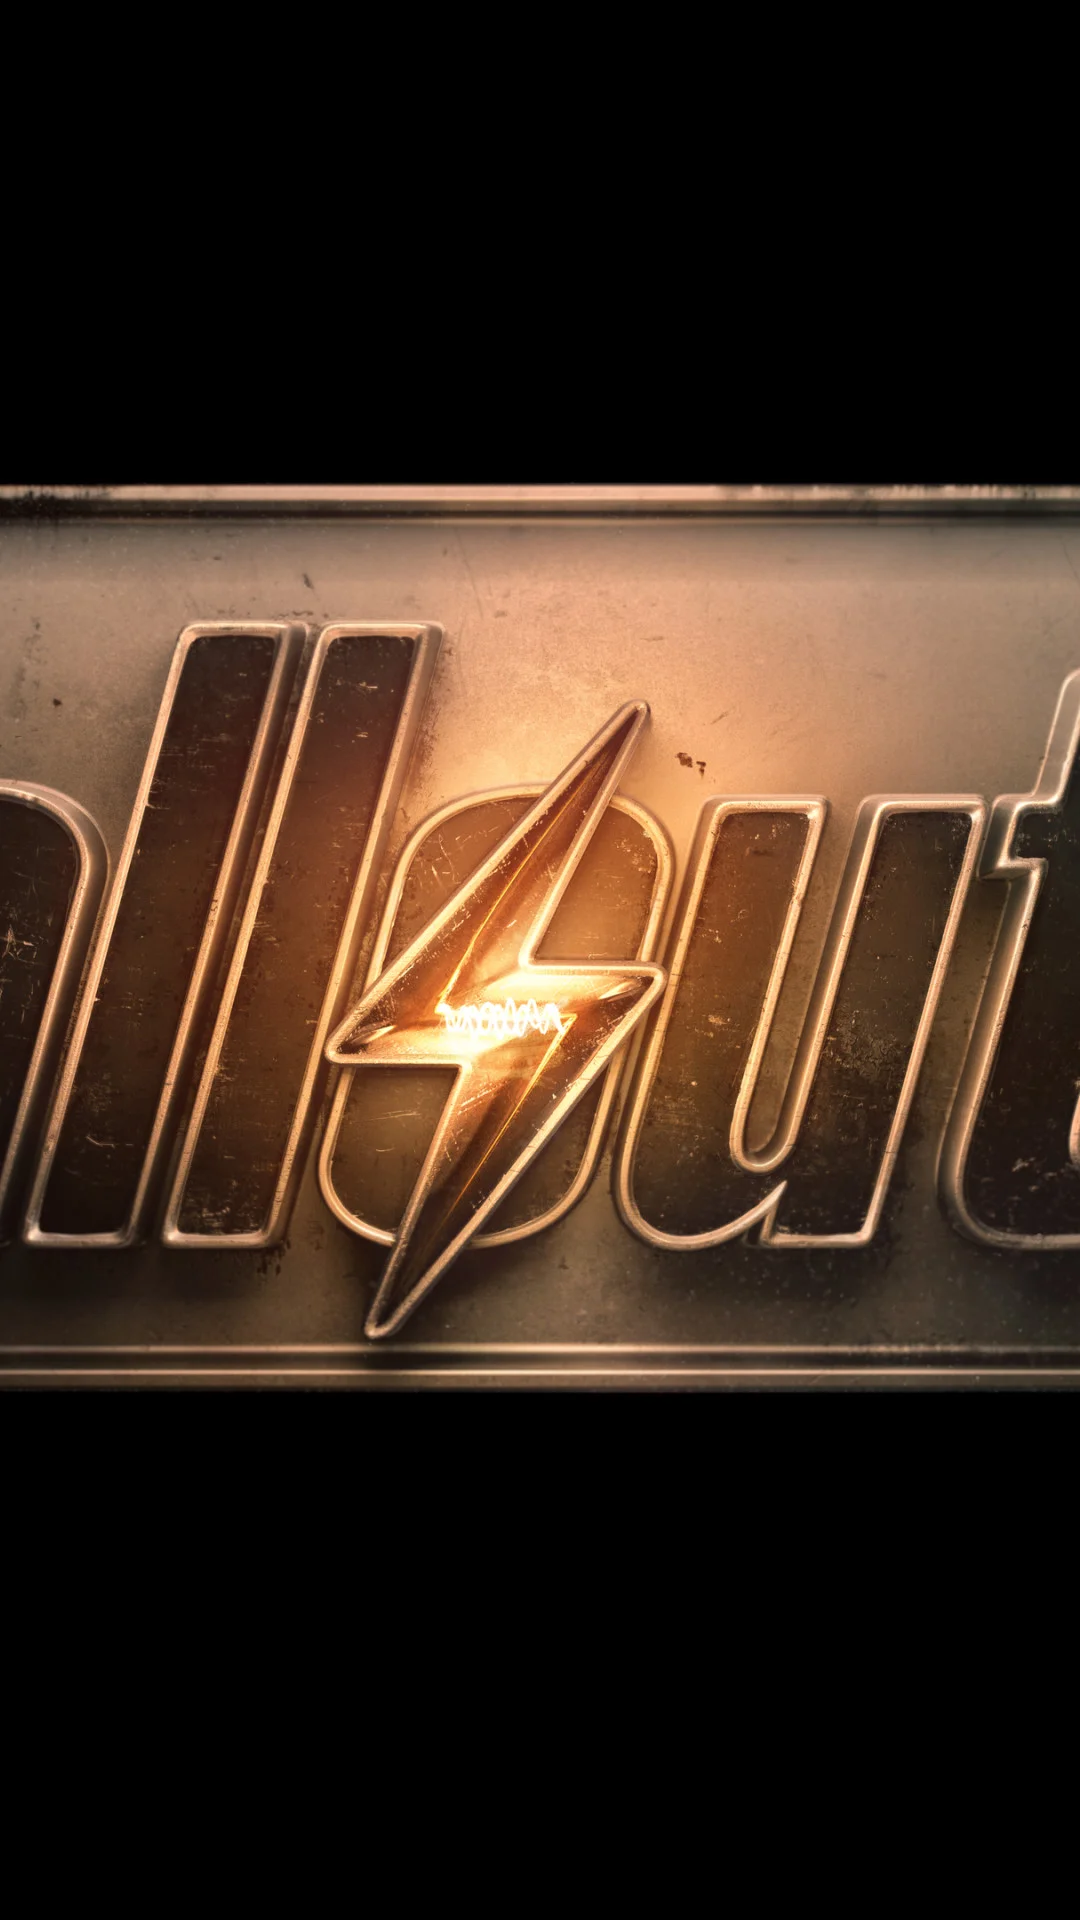 Fallout 4 Logo Wallpaper in 4k iPhone 6 Plus – Wallpaper – HD .